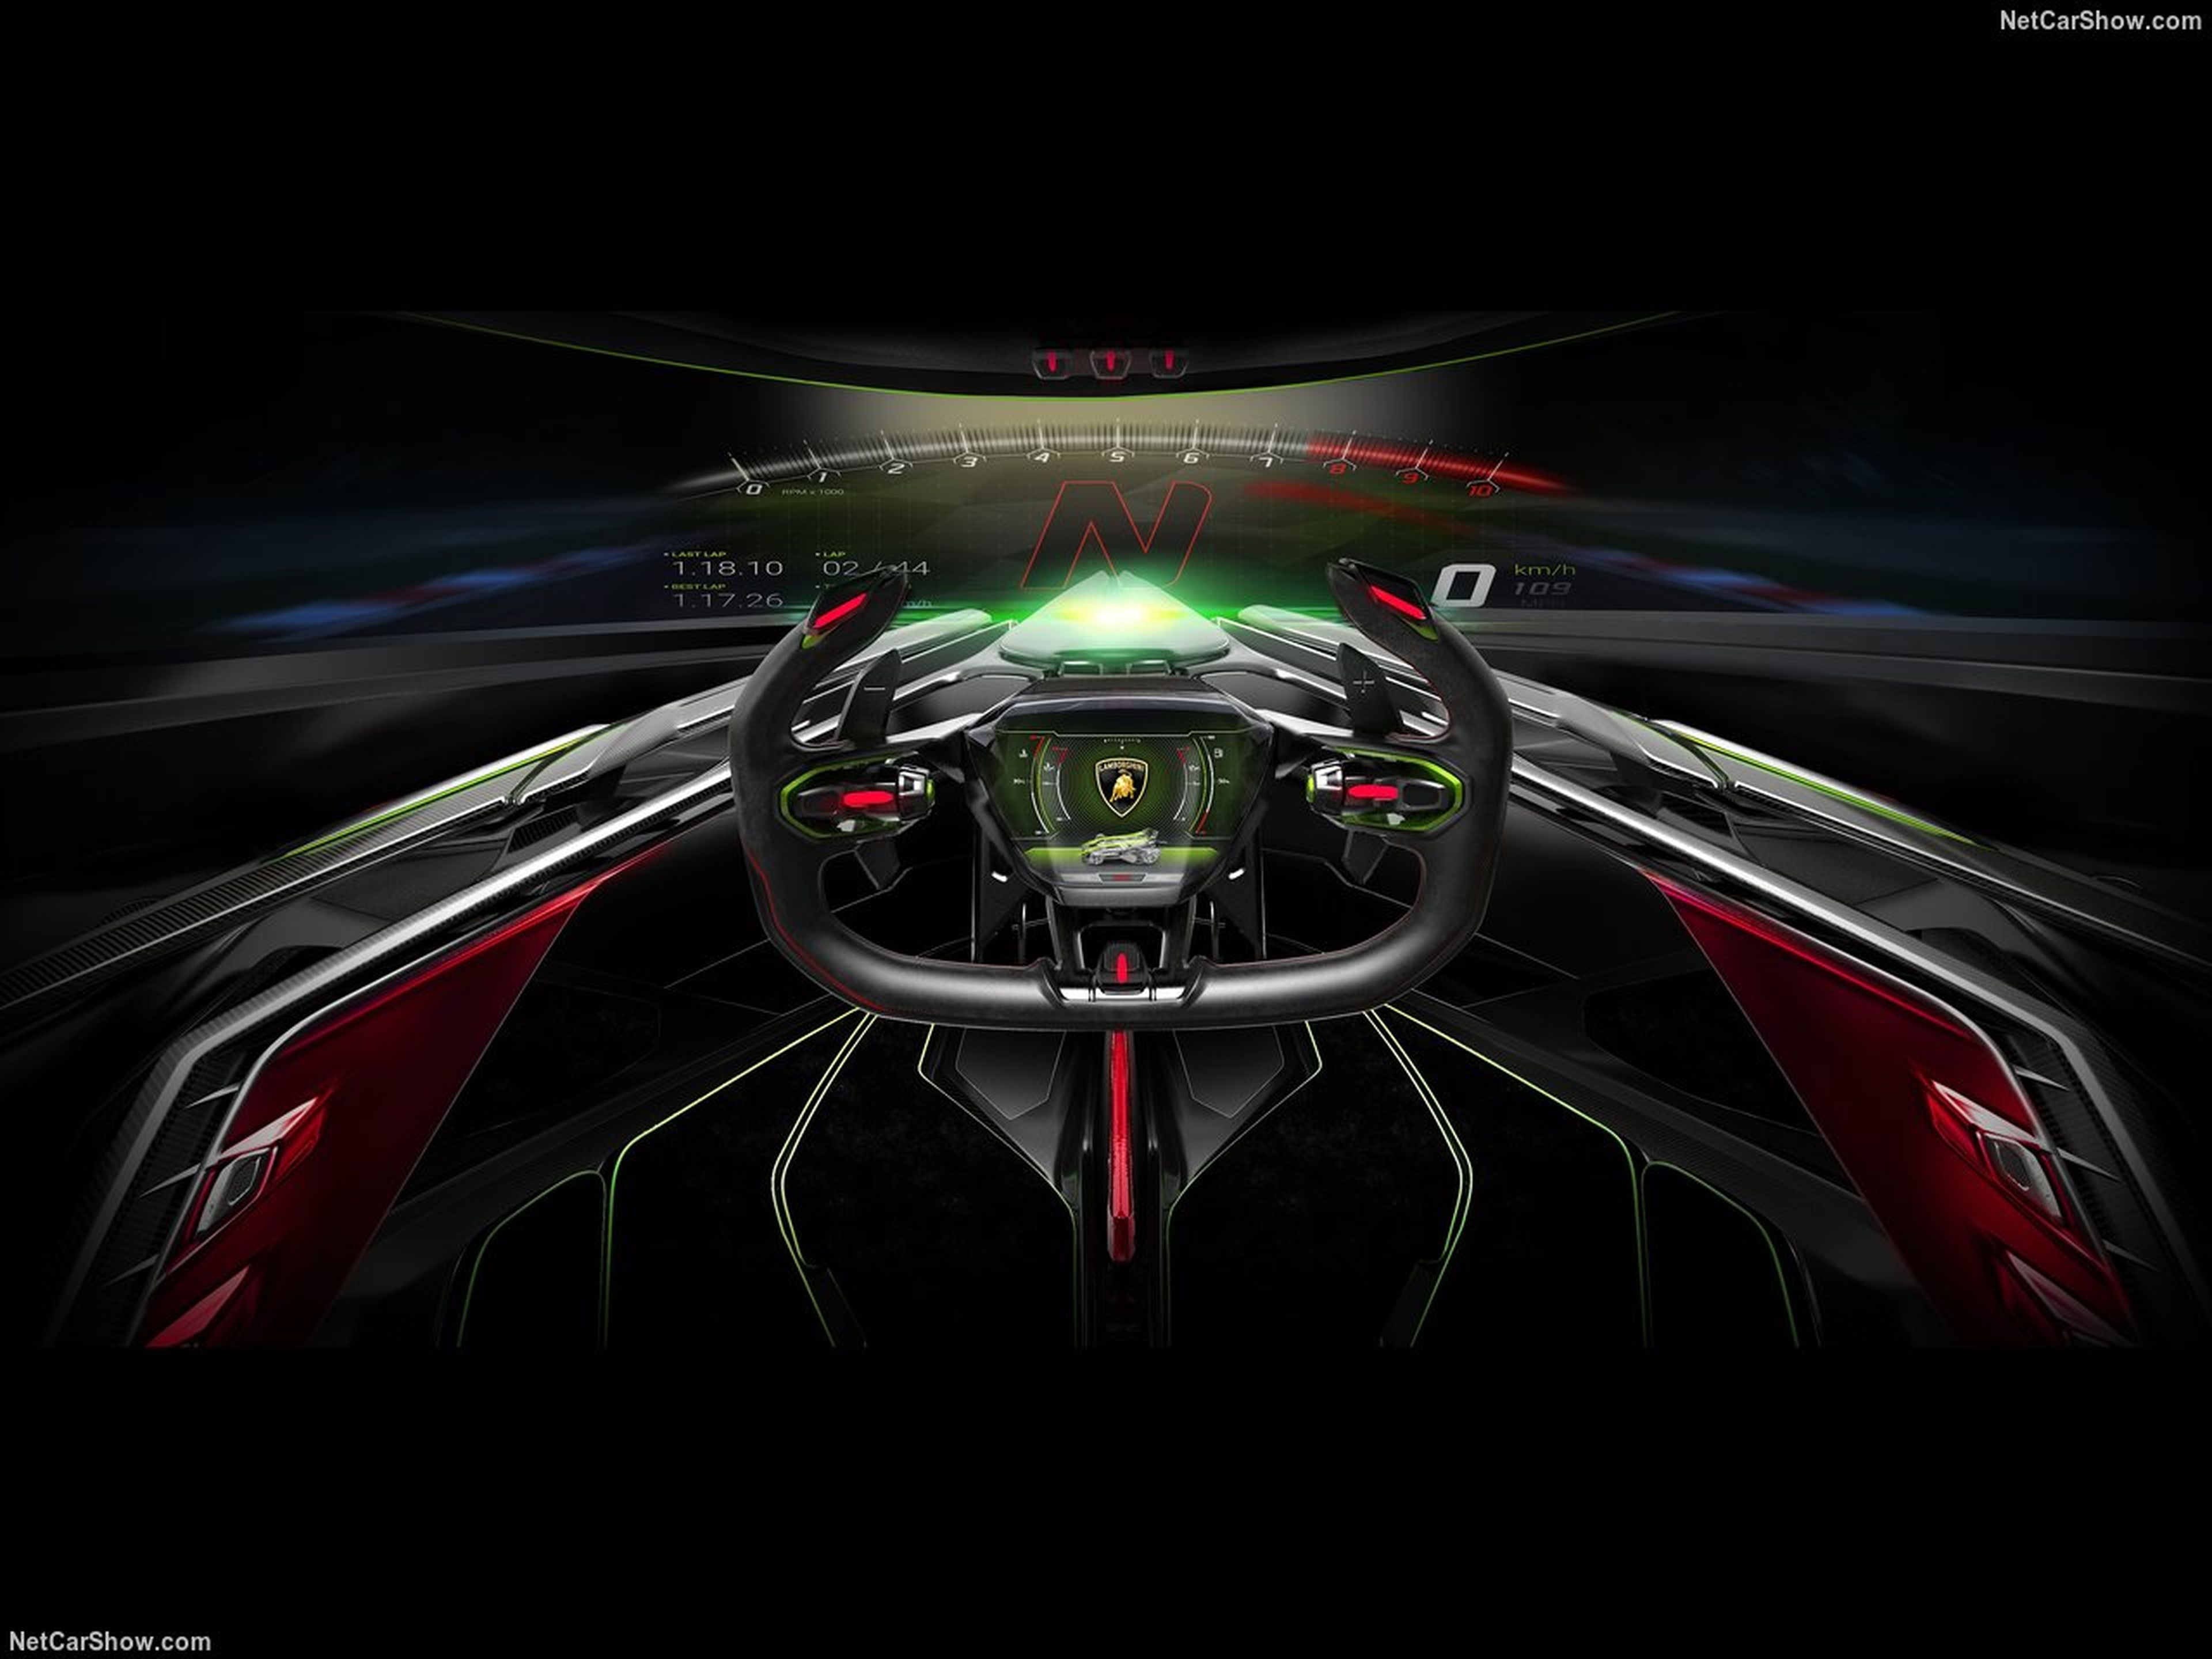 Lamborghini V12 Vision GT interior